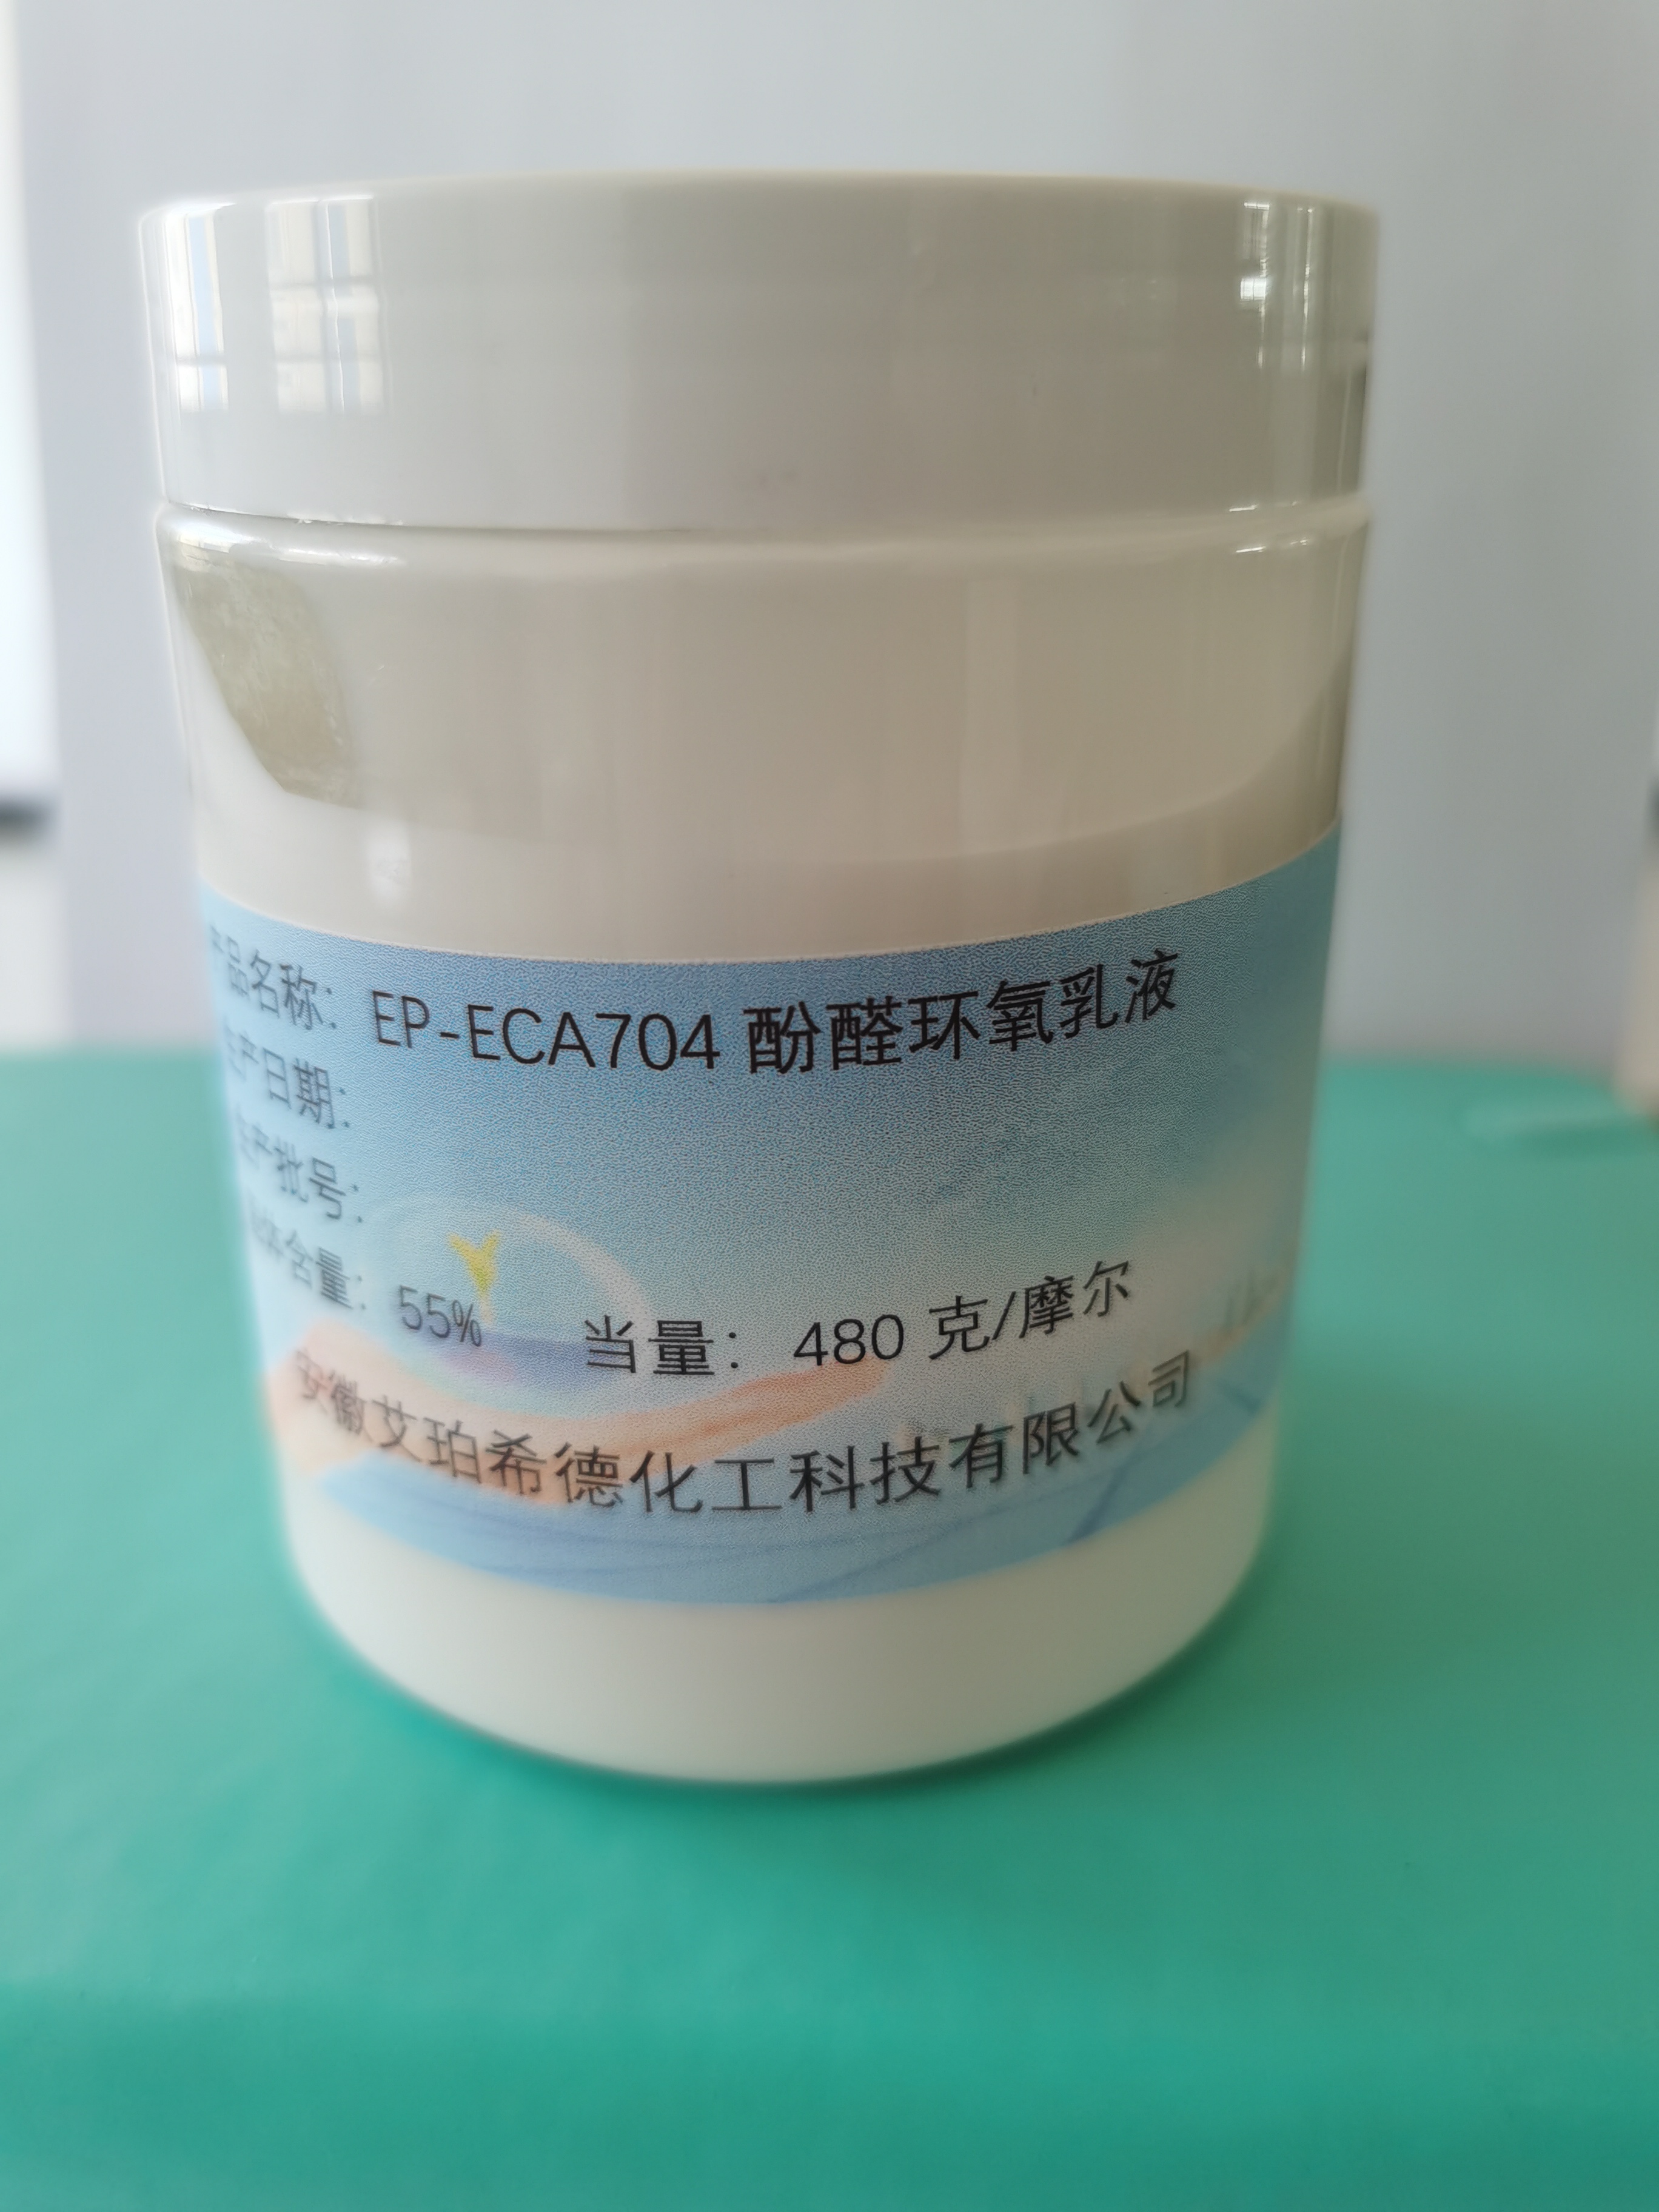 EP-ECN704环氧乳液